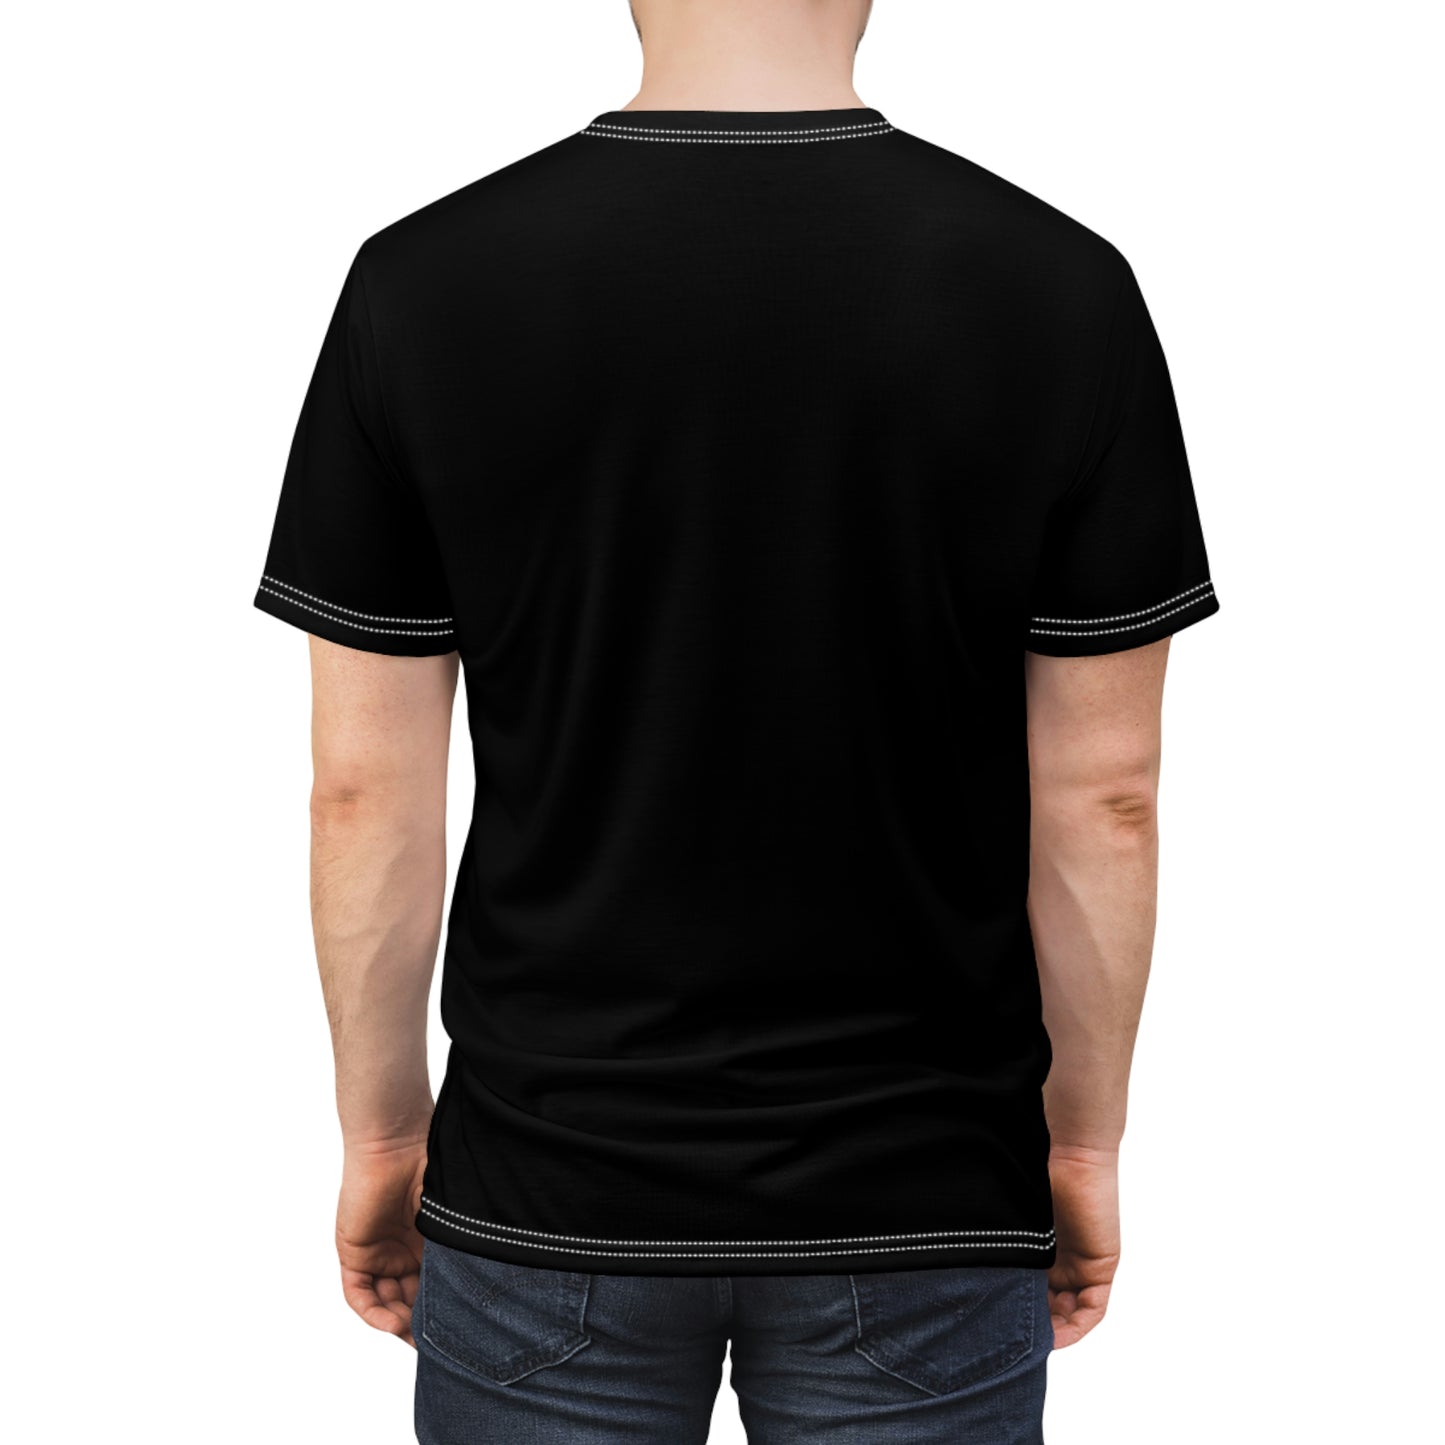 Carolina - Unisex All-Over Print Cut & Sew T-Shirt